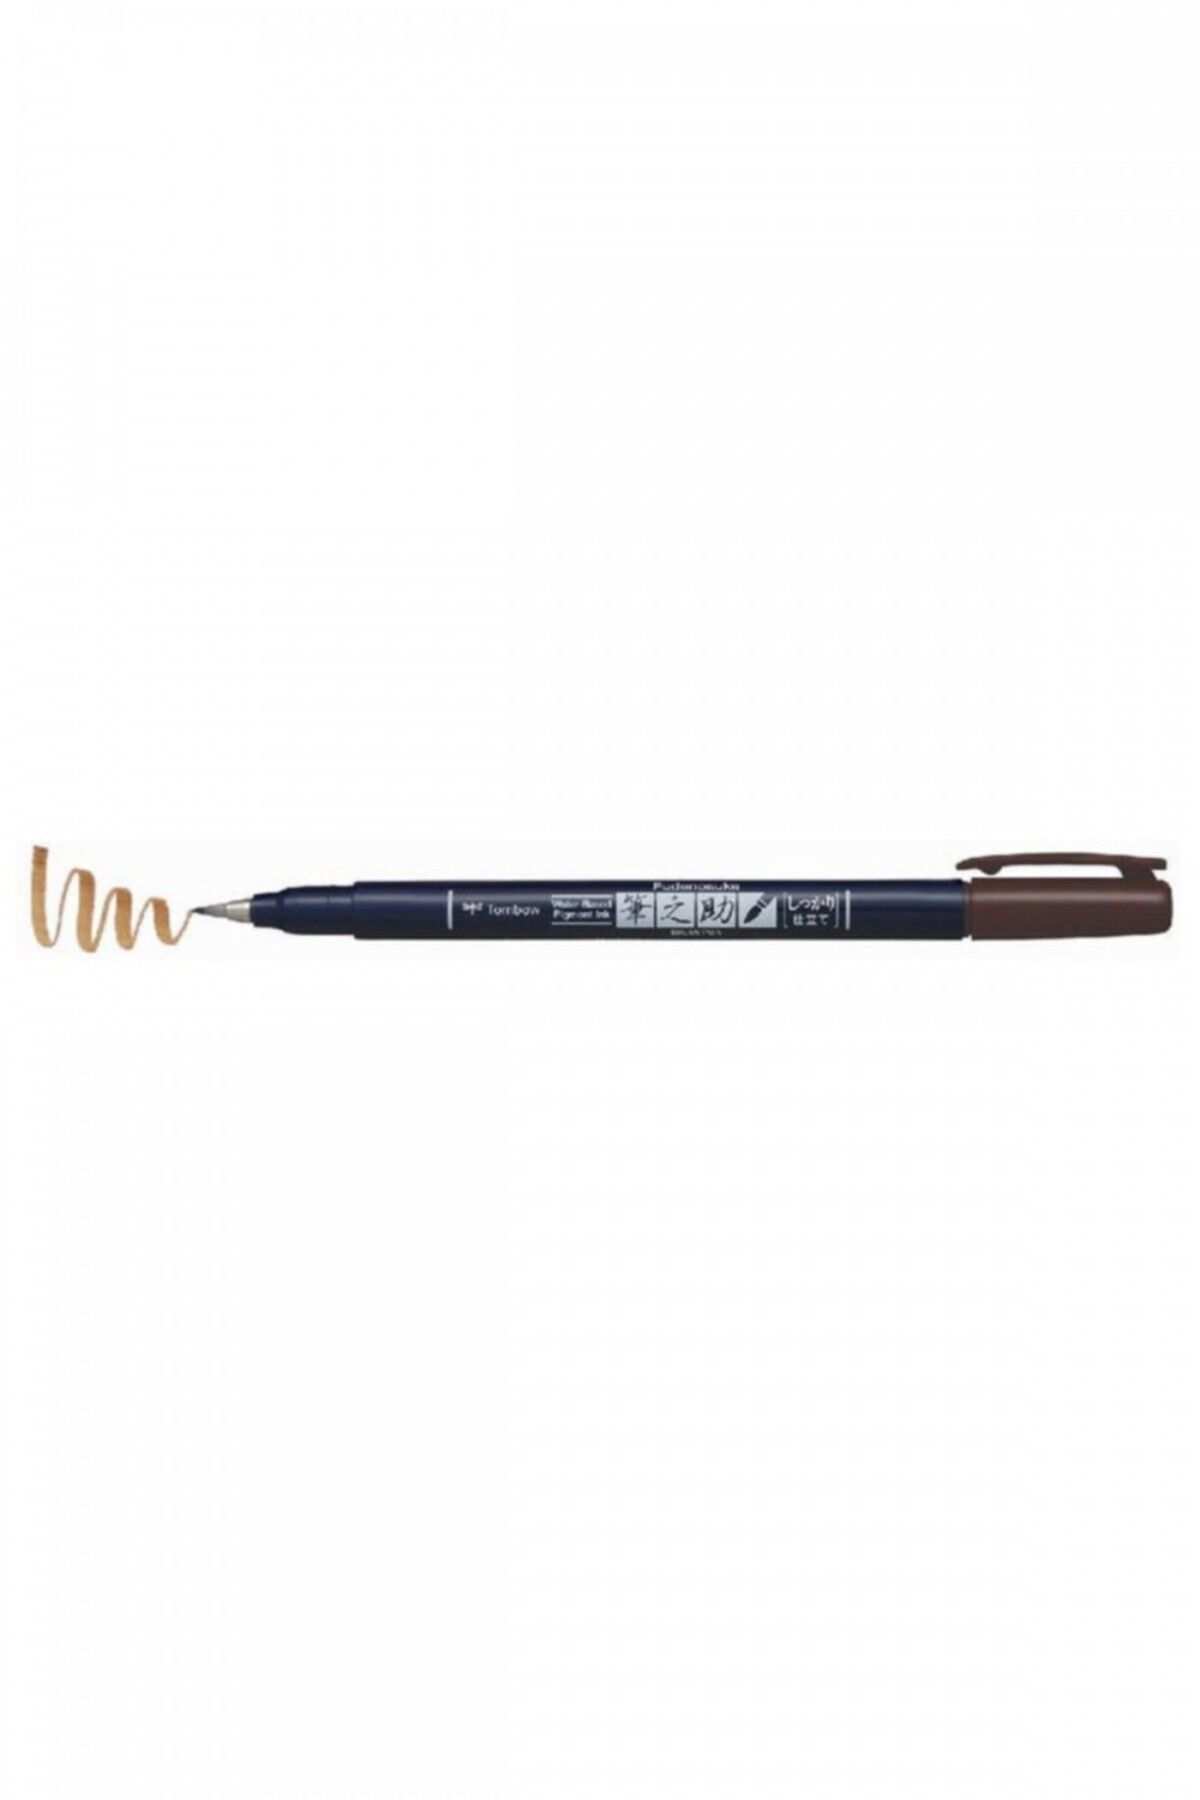 Tombow Fudenosuke Brush Pen Fırça Uçlu Kalem Sert Uç - Kahverengi